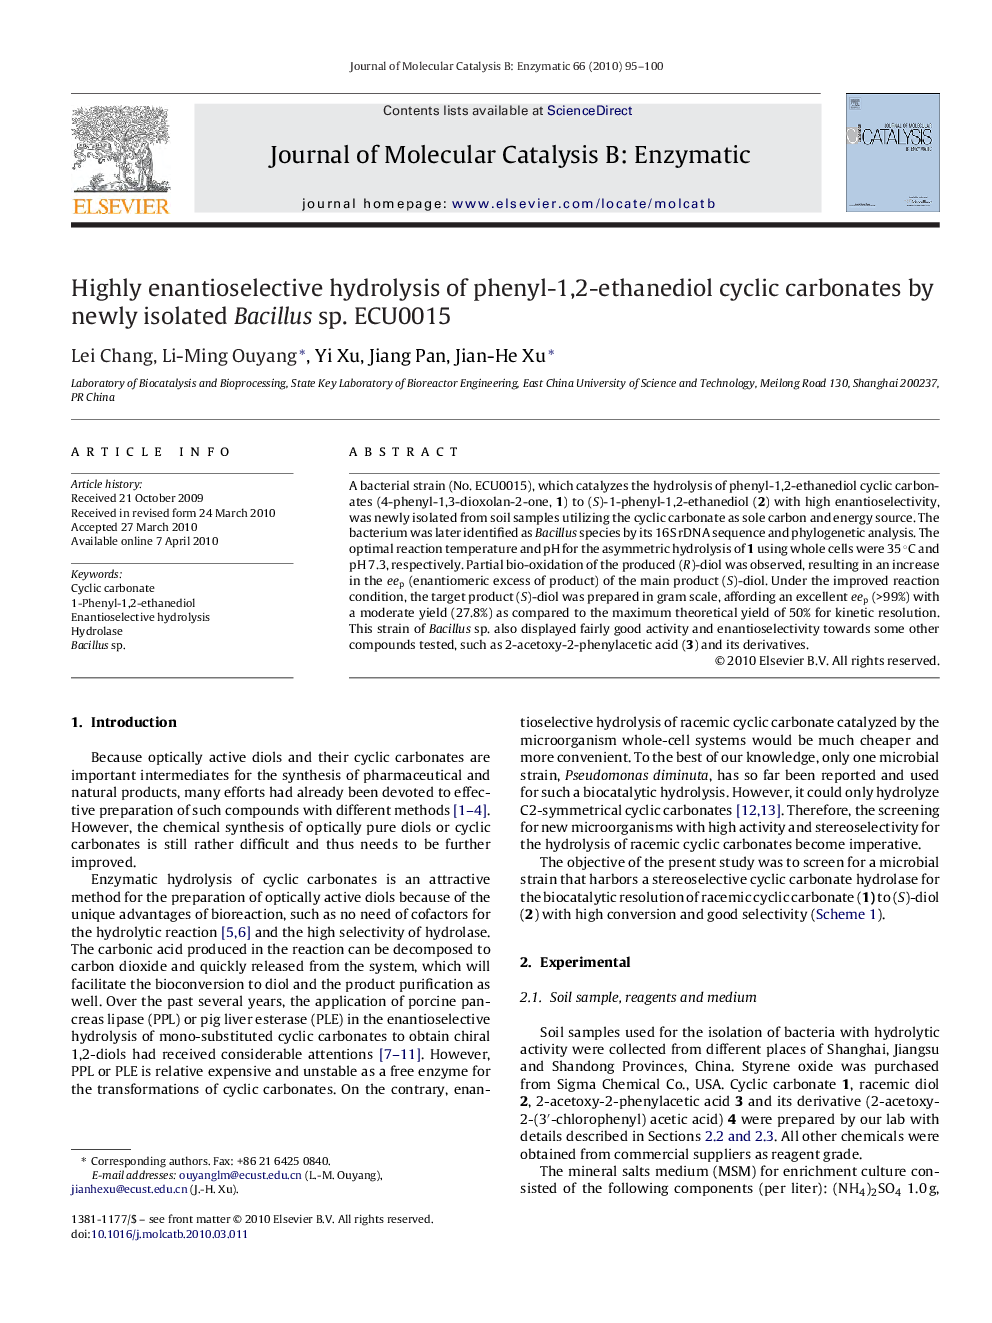 Highly enantioselective hydrolysis of phenyl-1,2-ethanediol cyclic carbonates by newly isolated Bacillus sp. ECU0015